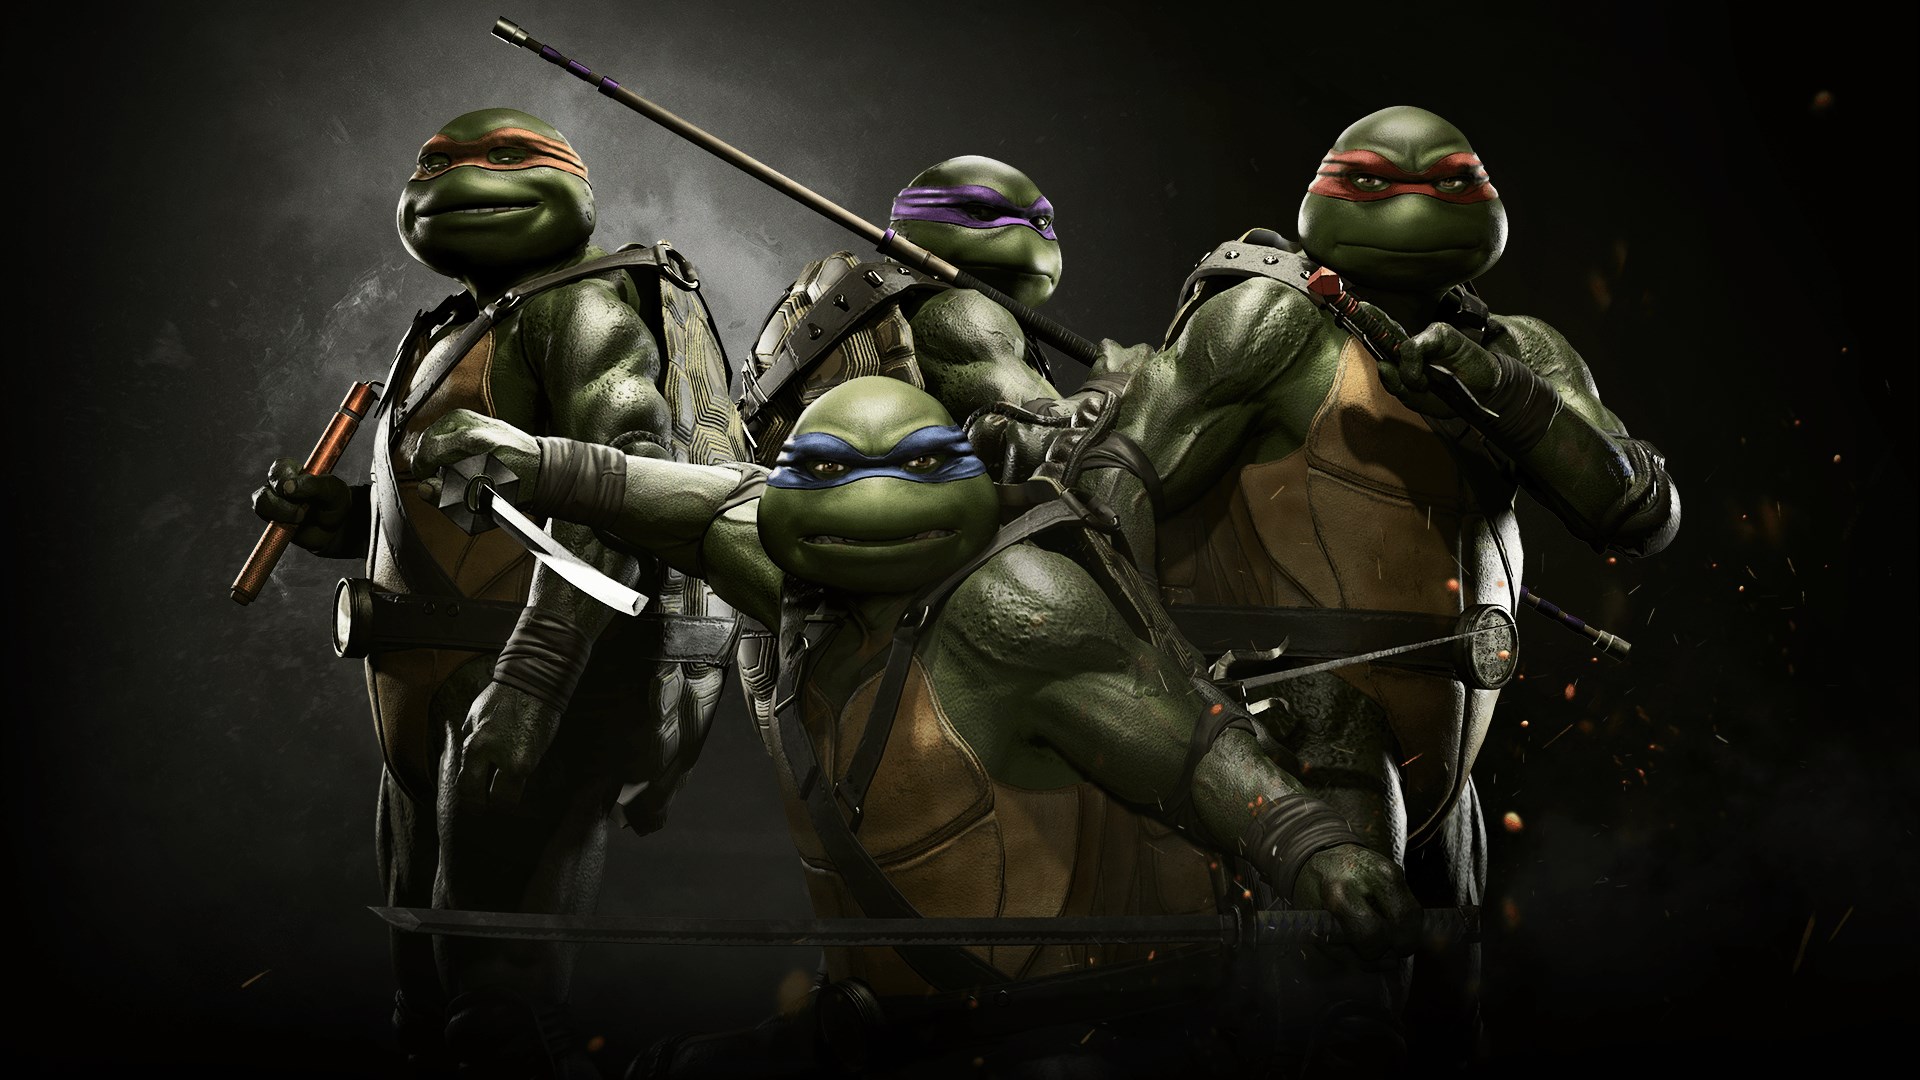 General 1920x1080 Teenage Mutant Ninja Turtles Injustice 2 DLC video games